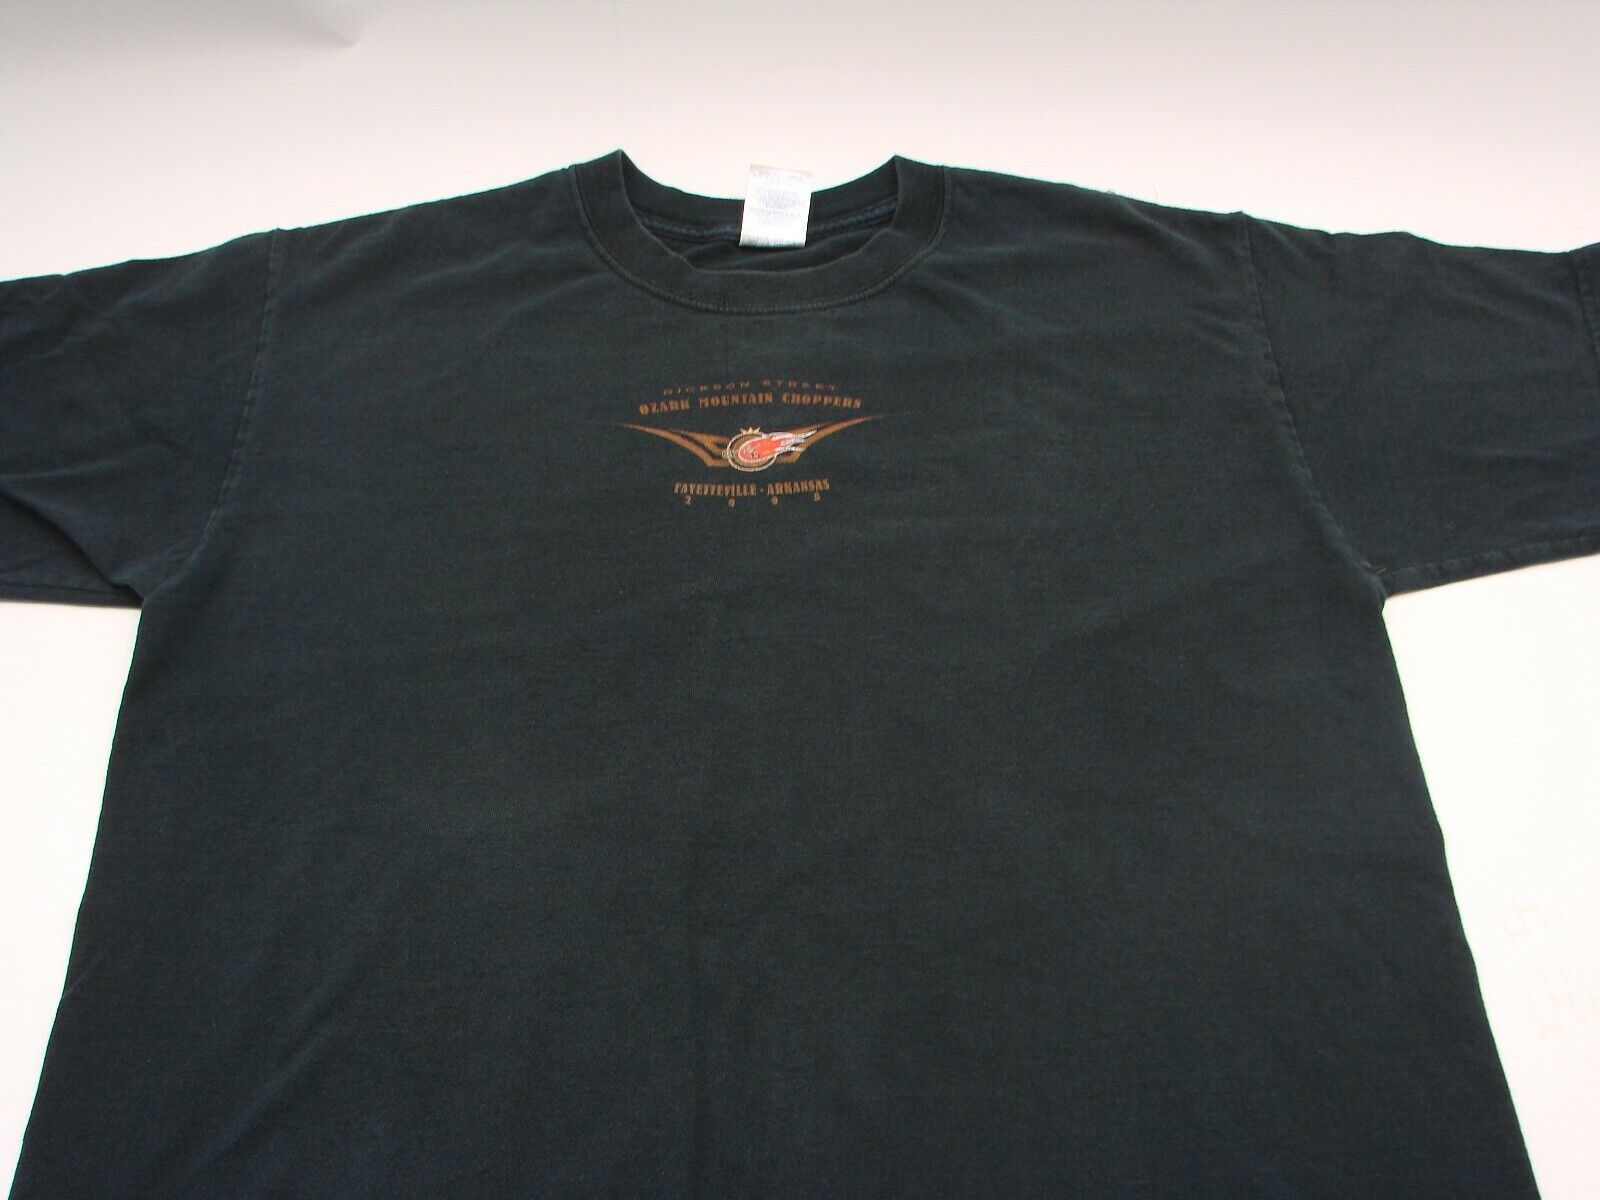 Primary image for Dickson Street Ozark Mountain choppers Arkansas 2005 Black Men's T-shirt Large 